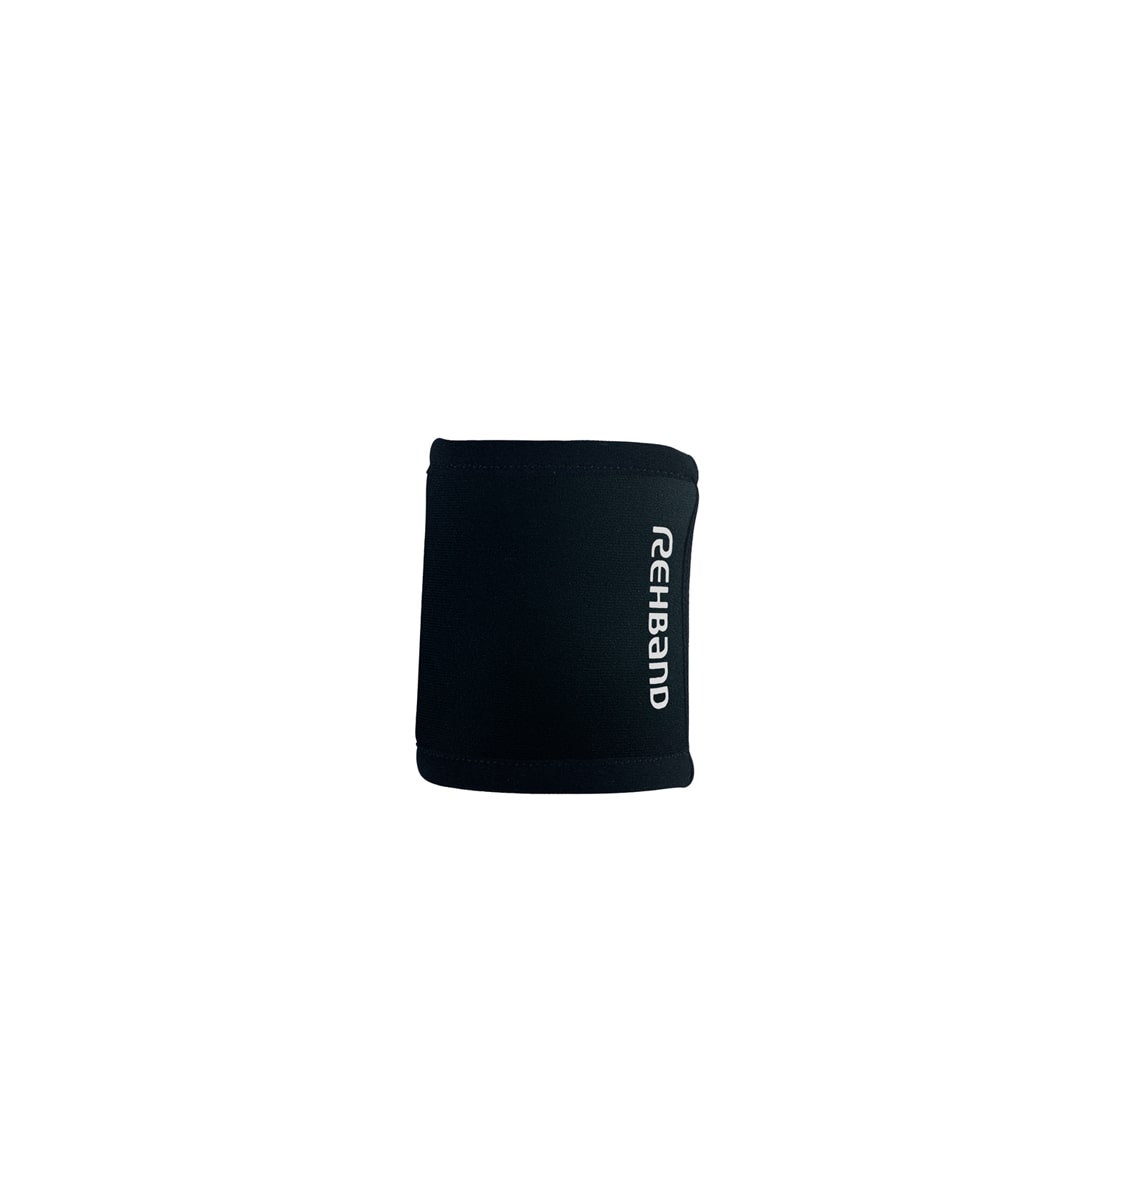 101306-01 - Rehband Rx Wrist Support - Black - 5mm - Back